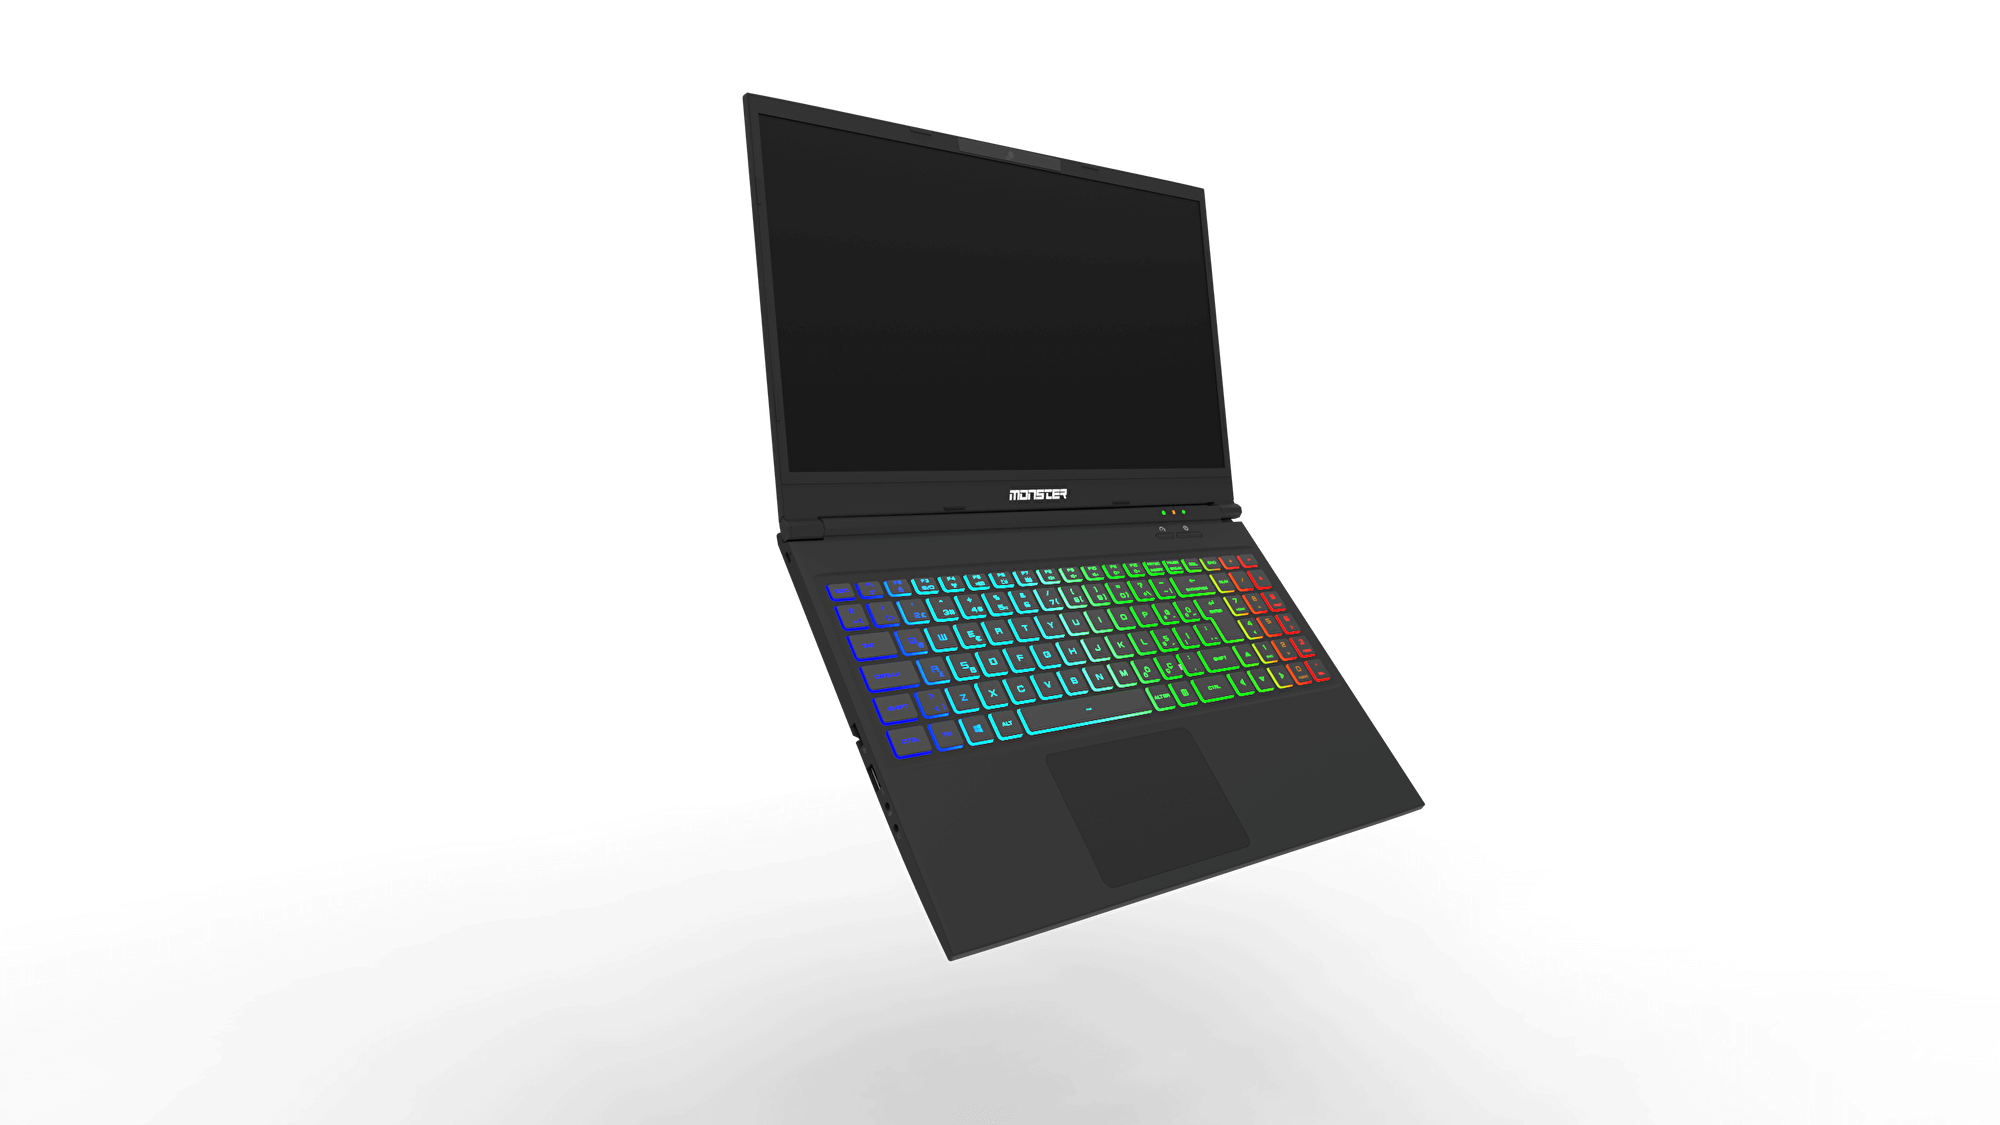 Abra A5 V15.2.1 15,6" Gaming Laptop 20781